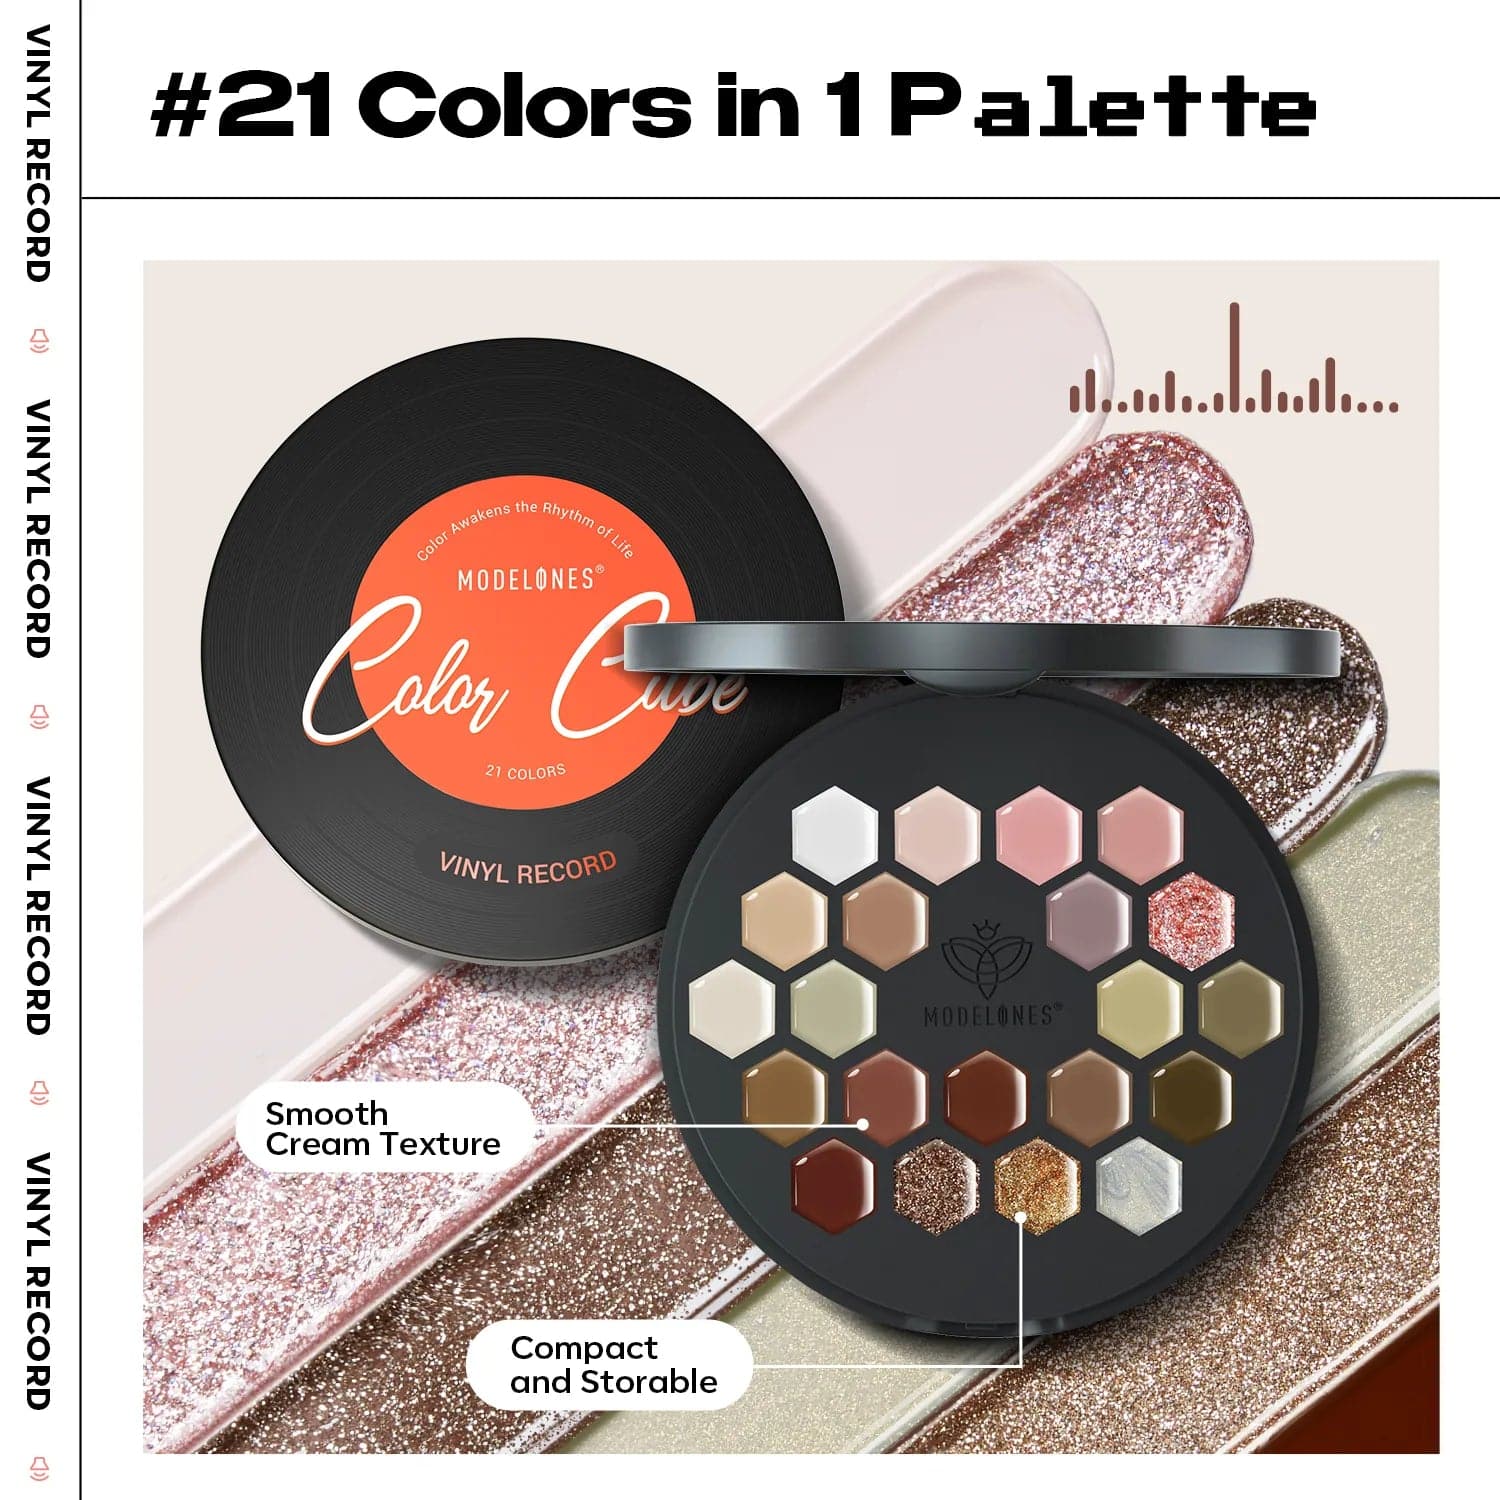 Everyday Life - 21 Colors Vinyl Record Solid Cream Gel Polish Color Cube